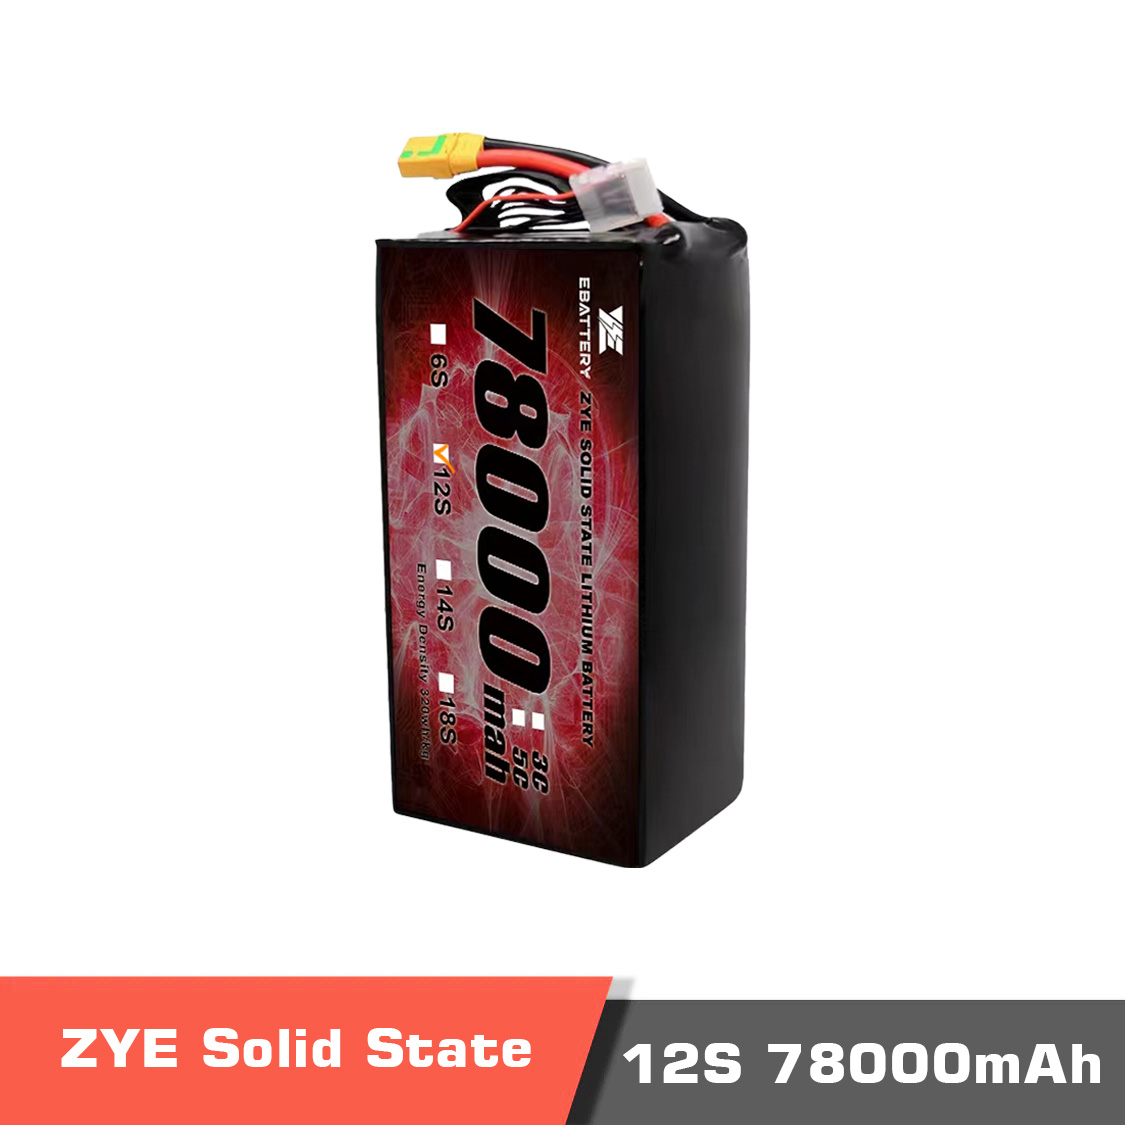 78000 12s temp.2 - ZYE Power Ultra HV Semi Solid-State Battery,Ultra HV Semi Solid-State Battery,6S 78000mAh high voltage LiPo Battery,6S 78000mAh HV LiPo Battery,Solid-state LiPo battery,lipo battery,drone battery,6s battery,high energy density battery,UAV,drone,vtol,ZYE Power,ZYE power Battery - MotioNew - 2